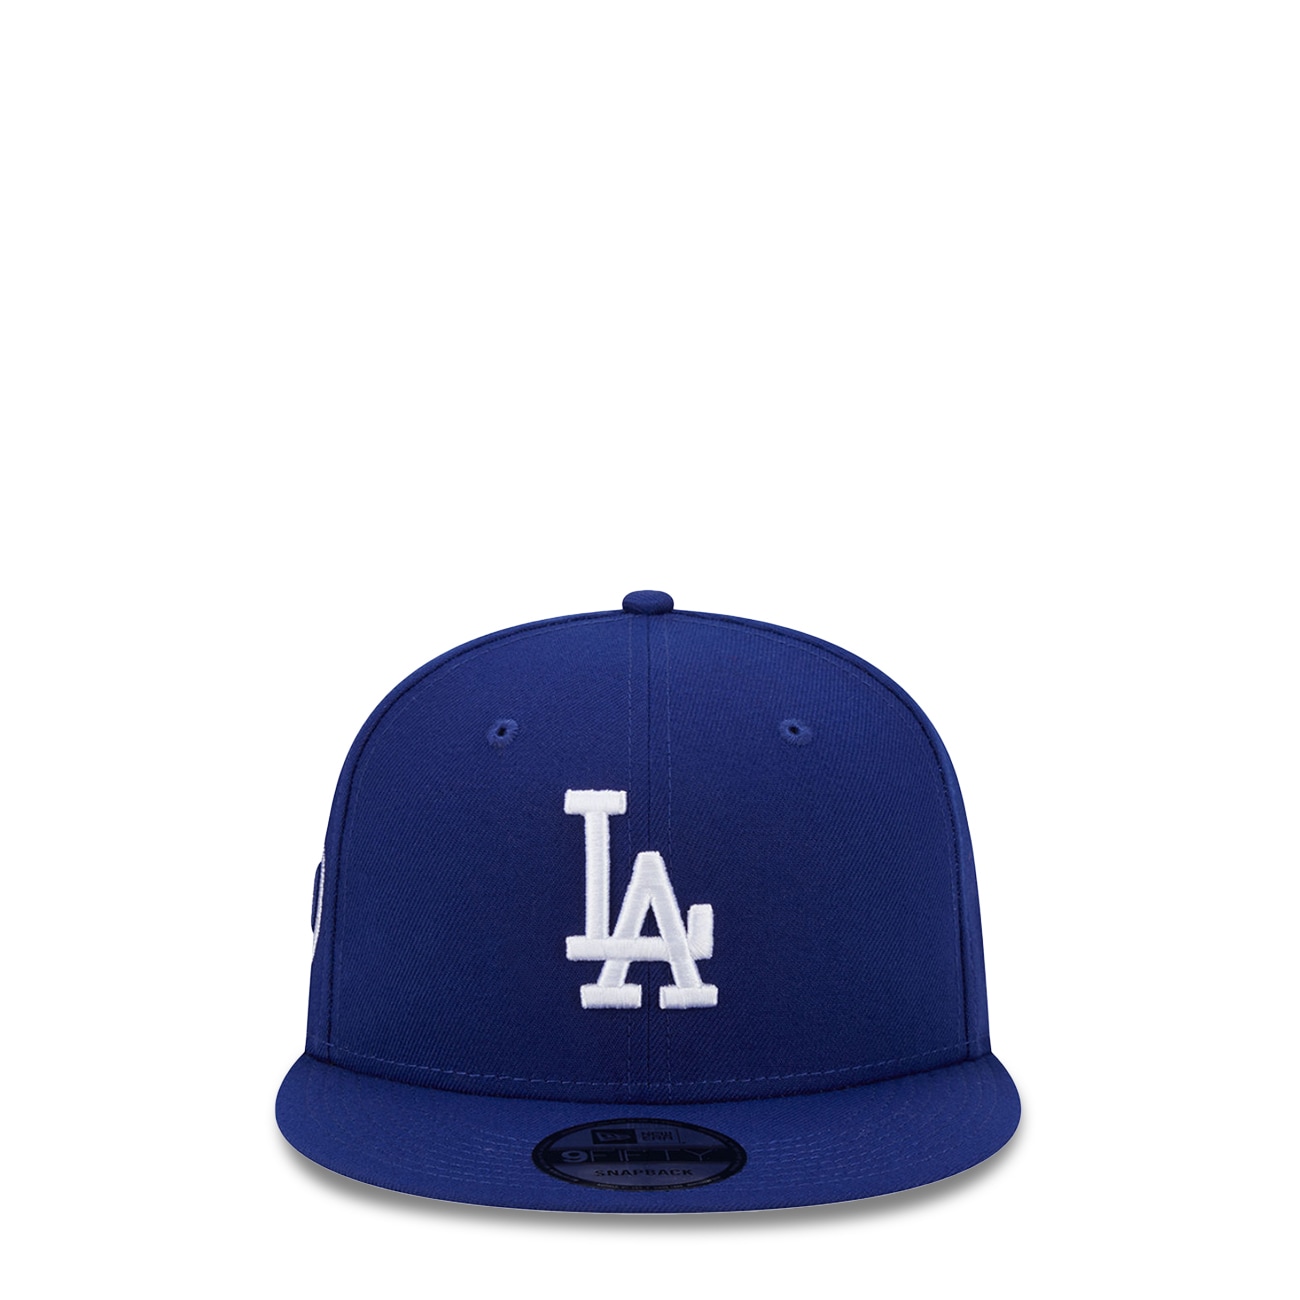 Los Angeles Dodgers MLB Basic 9FIFTY Snapback Cap